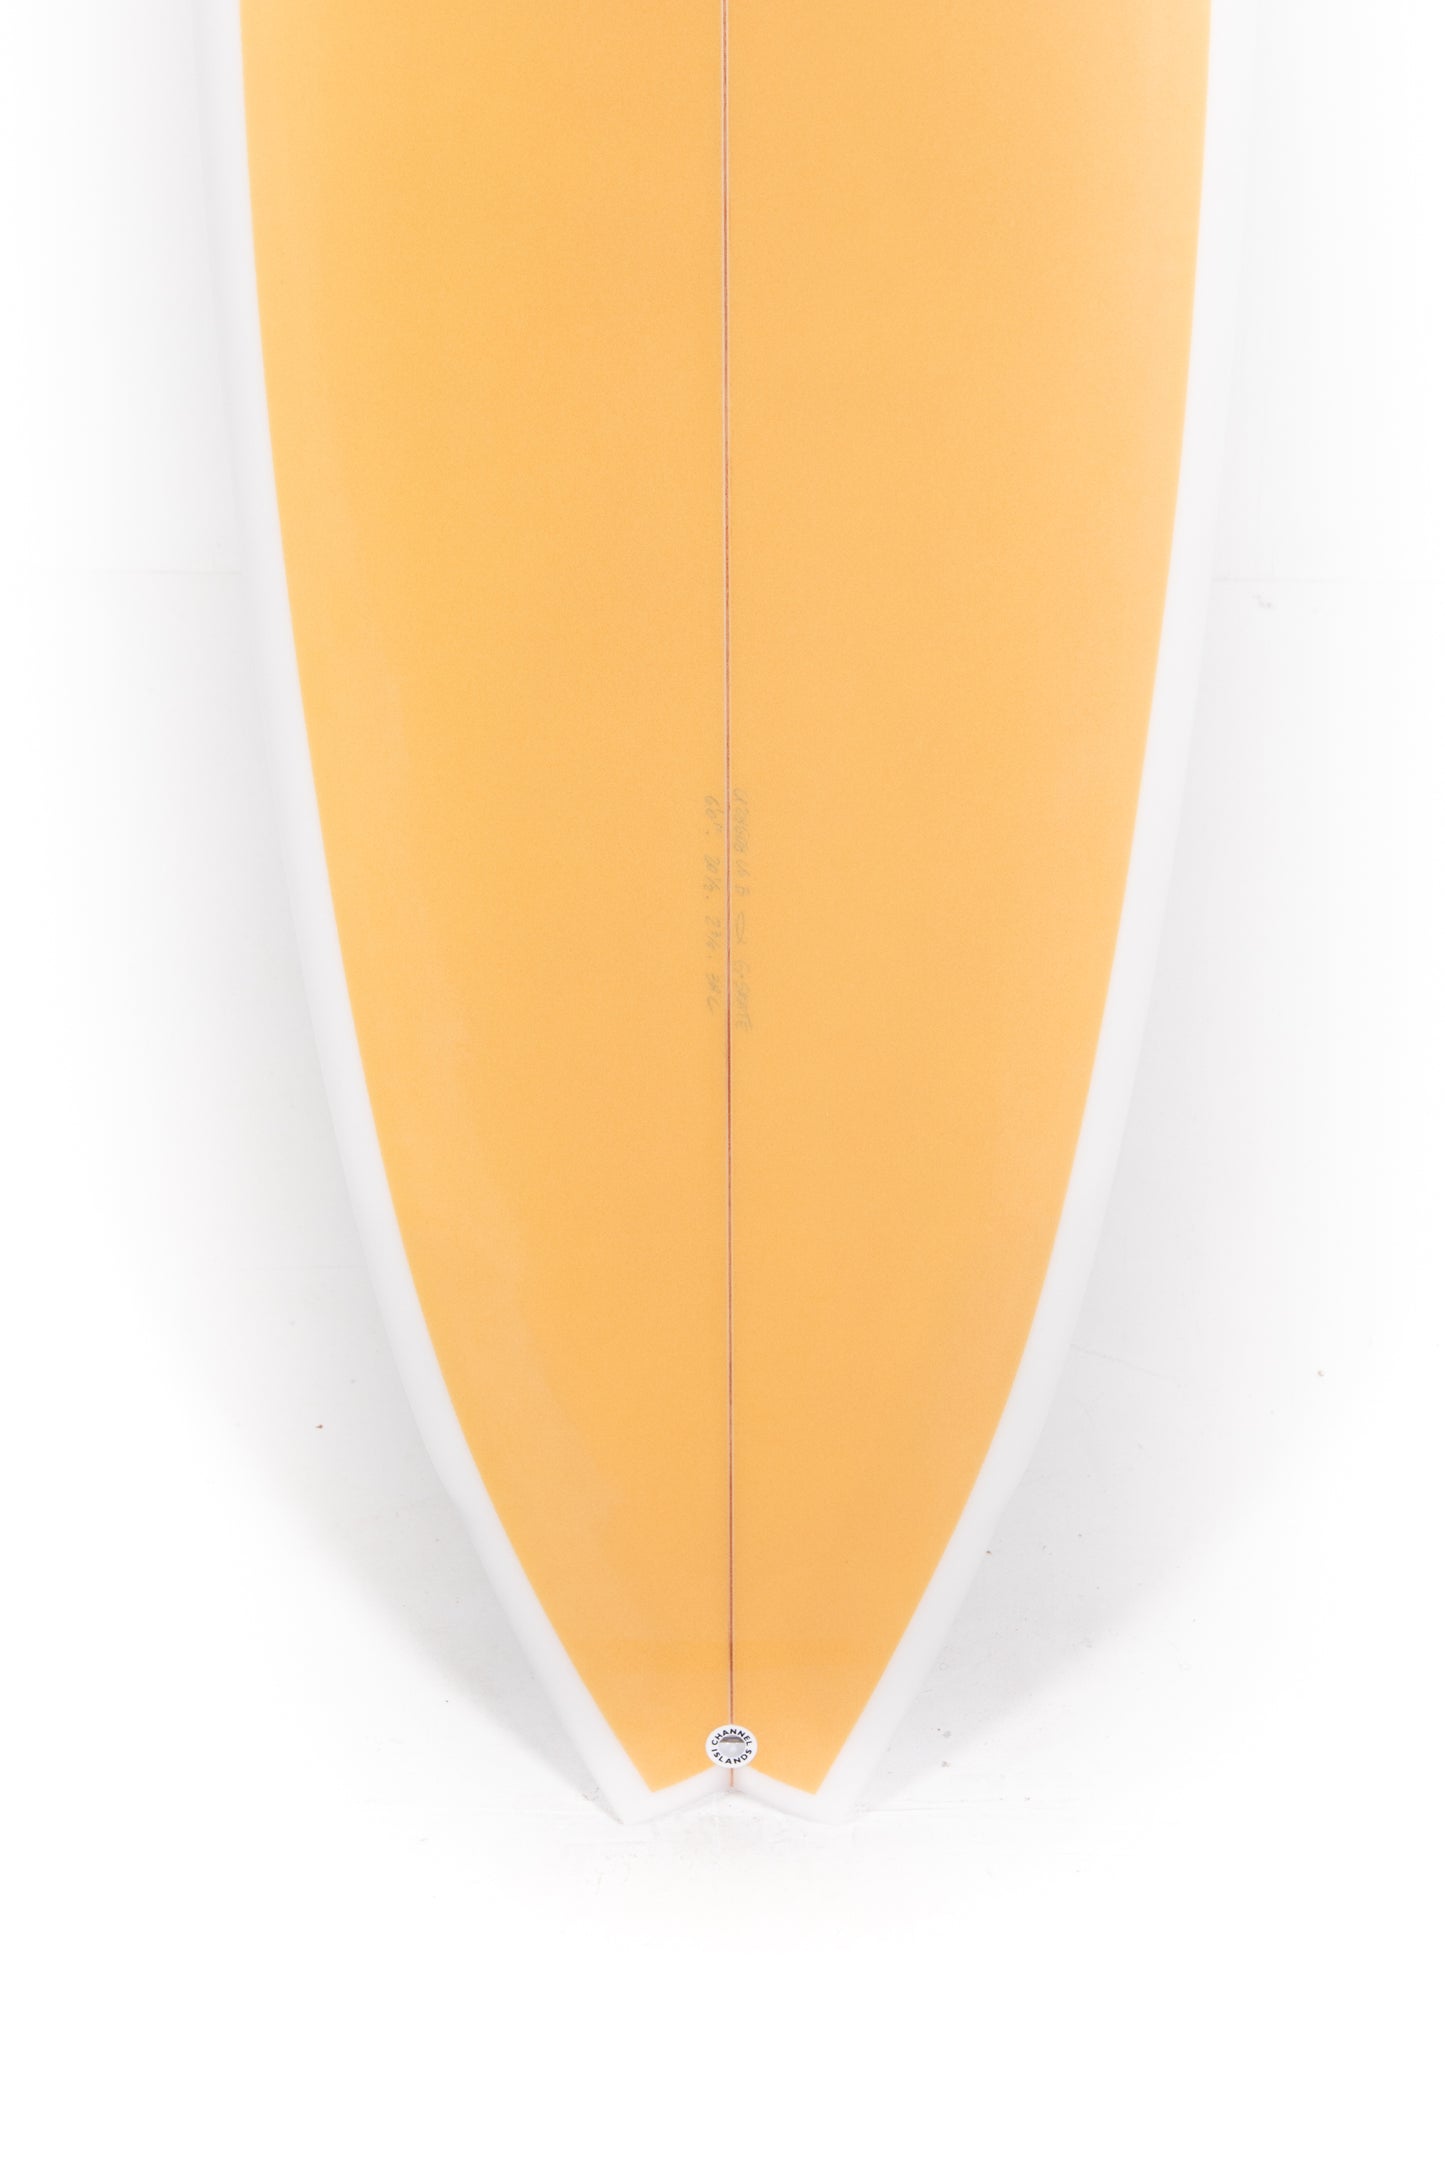 
                  
                     Analyzing image    Pukas-Surf-Shop-Channel-Island-Surfboards-G-Skate-Al-Merrick-6_0_-CI28608
                  
                